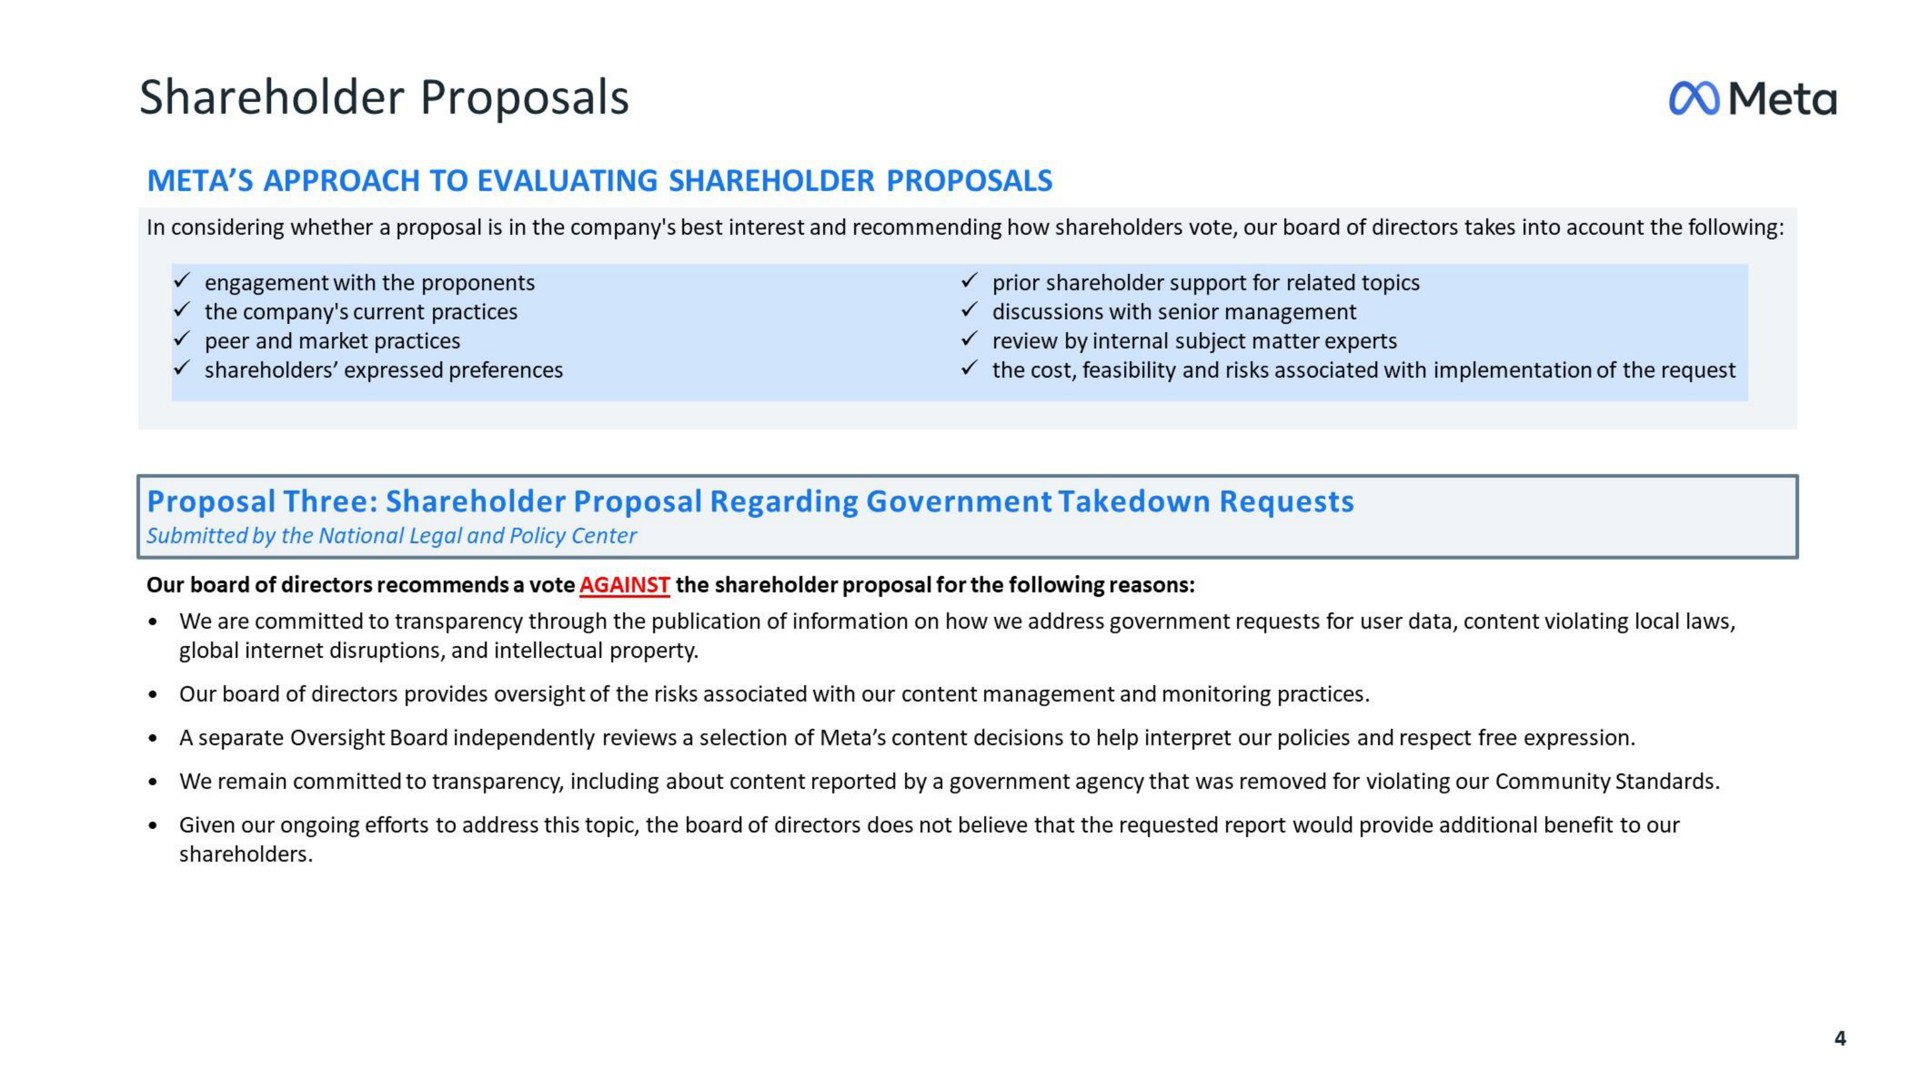 shareholder proposals meta meta approach to evaluating shareholder proposals proposal three shareholder proposal regarding government takedown requests | Meta